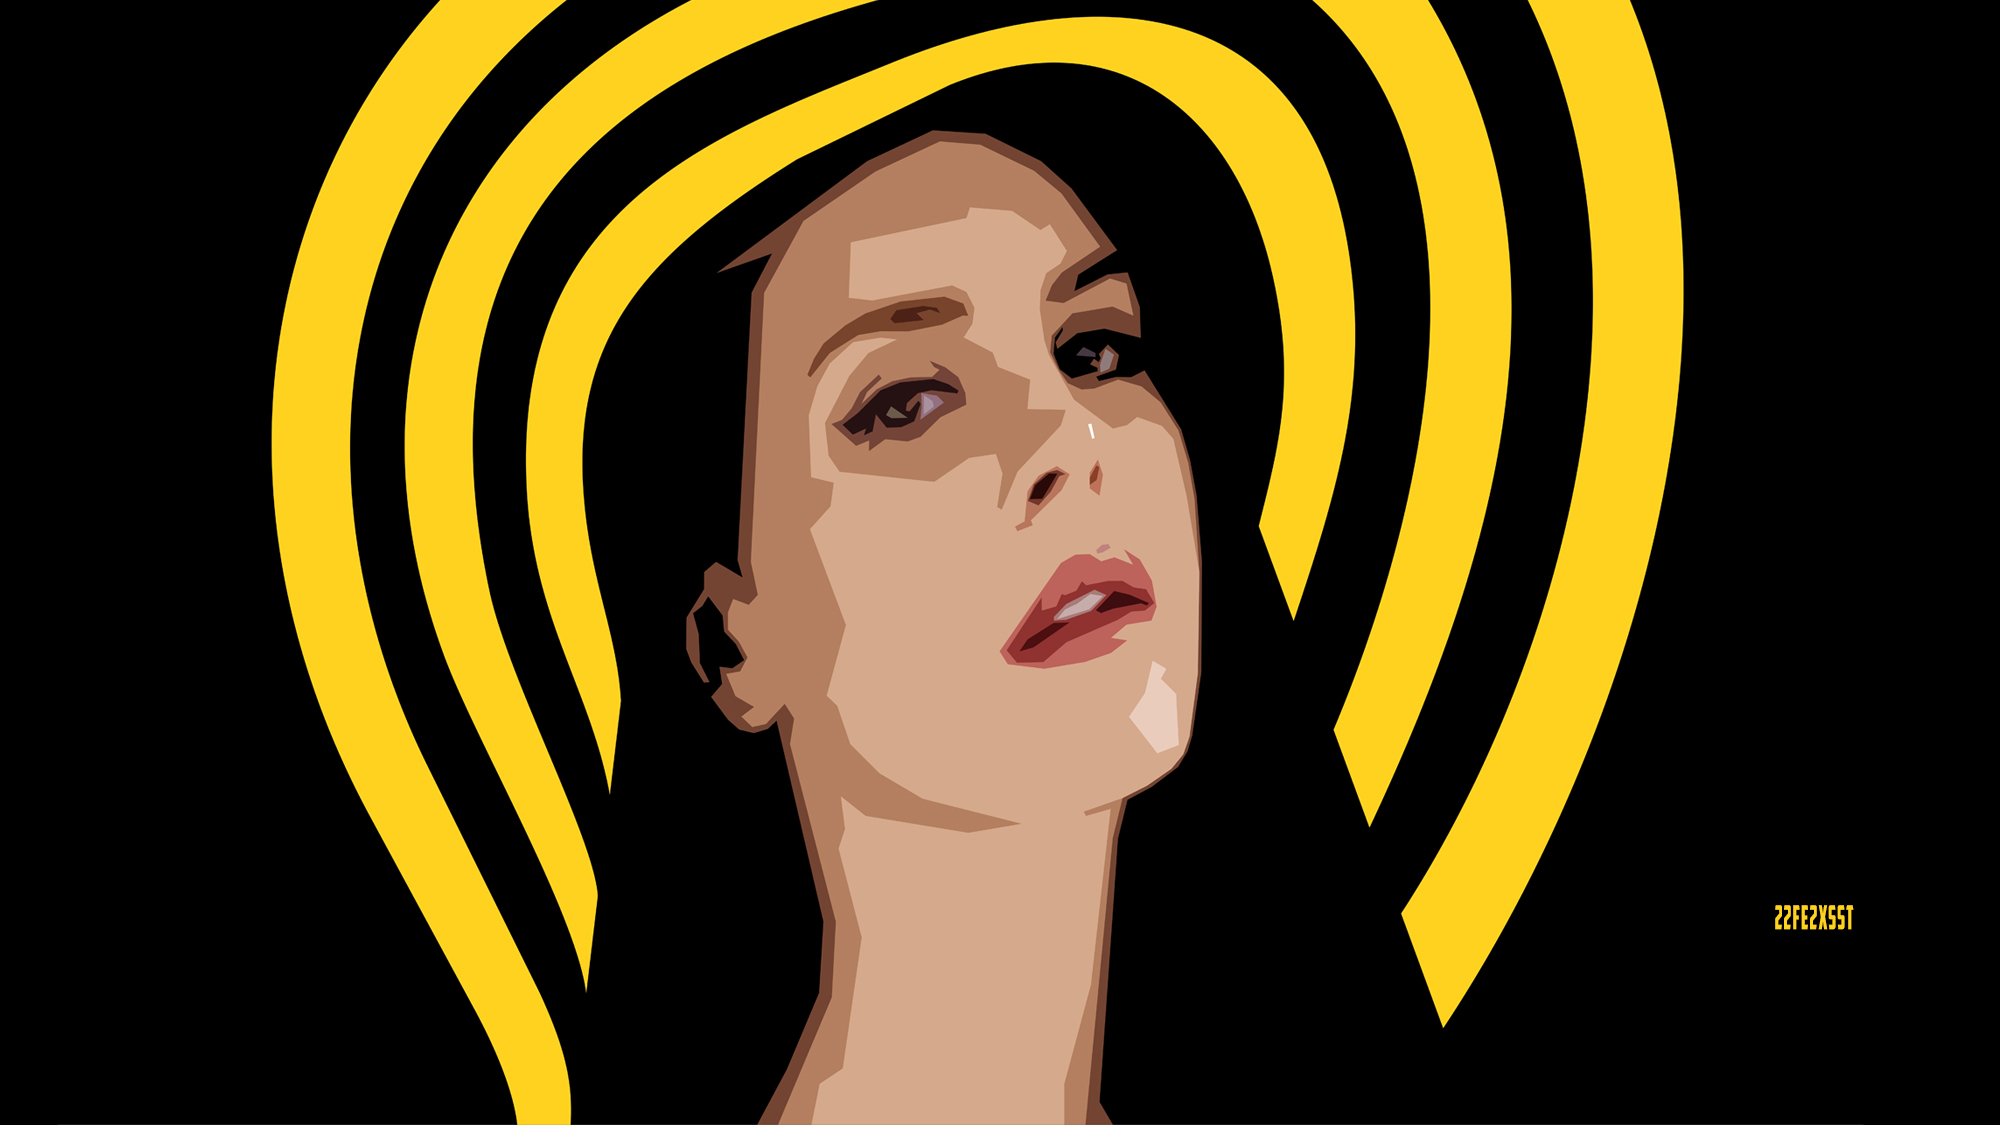 Lana Del Rey Musician Portrait Singer 2000x1125